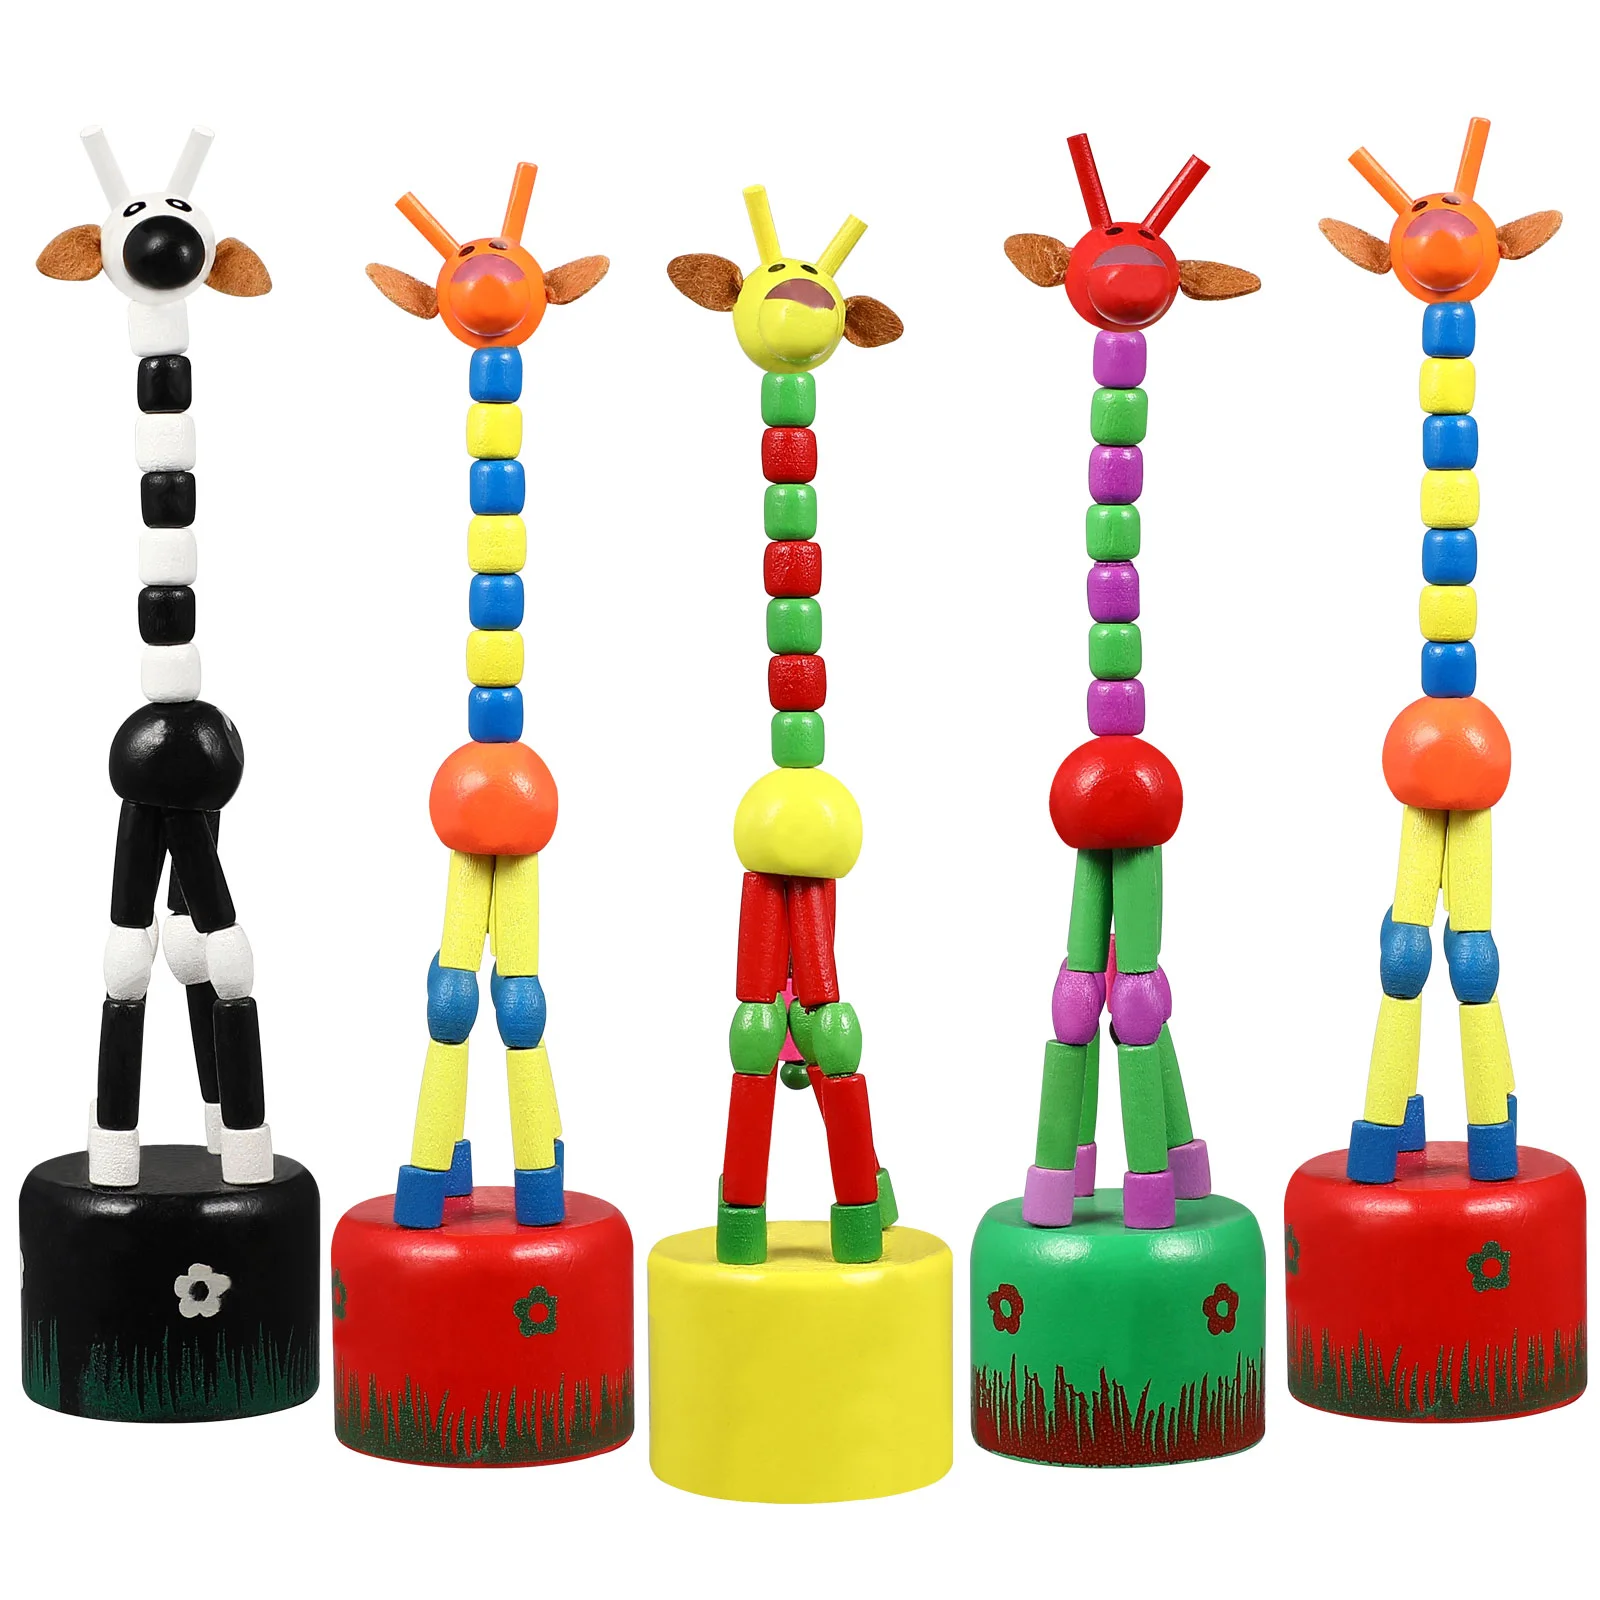 

Giraffe Puppets Wooden Finger Toys Toy Push Dancing Figurine Puppet Kids Animal Fidget Cartoon Rocking Toddlers Thumb Child